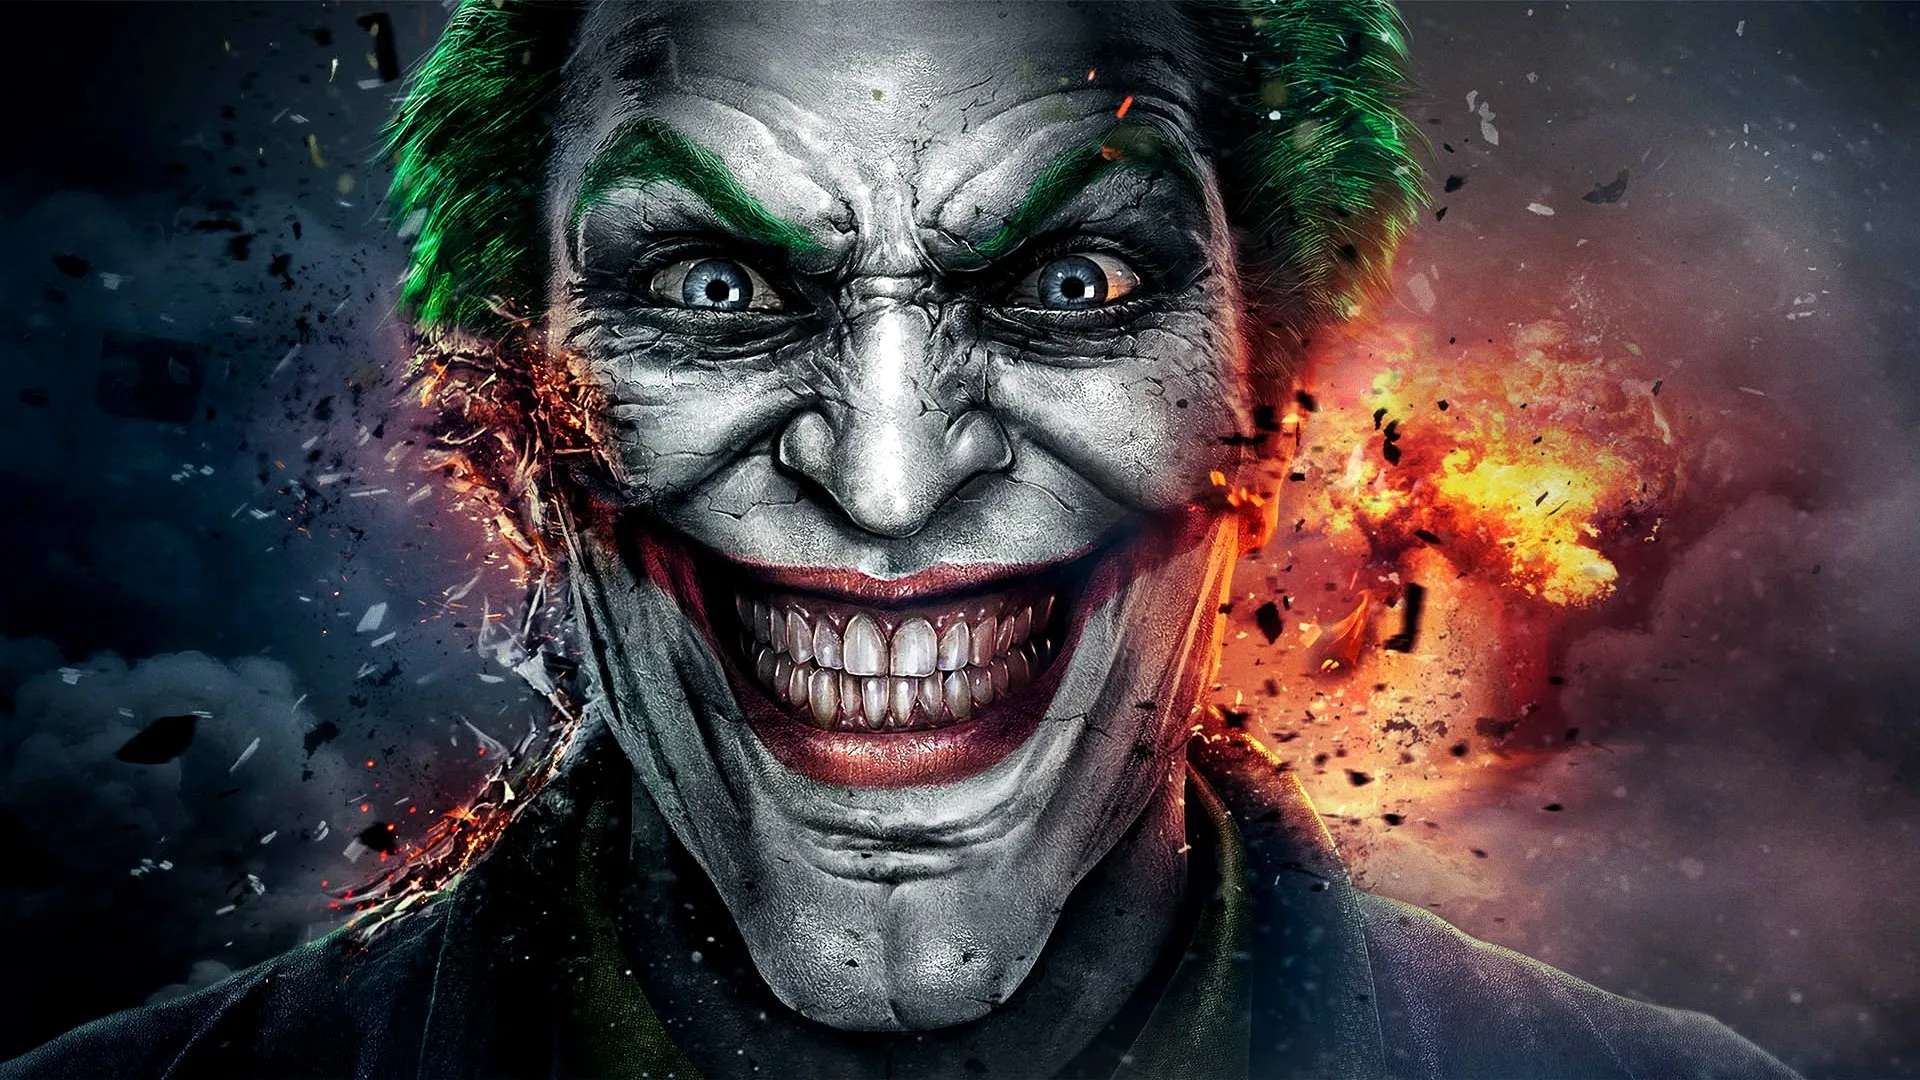 1920x1080 Director David Ayer describes The Joker, shares photos from hi-tech 'Suicide Squad' set | Batman News